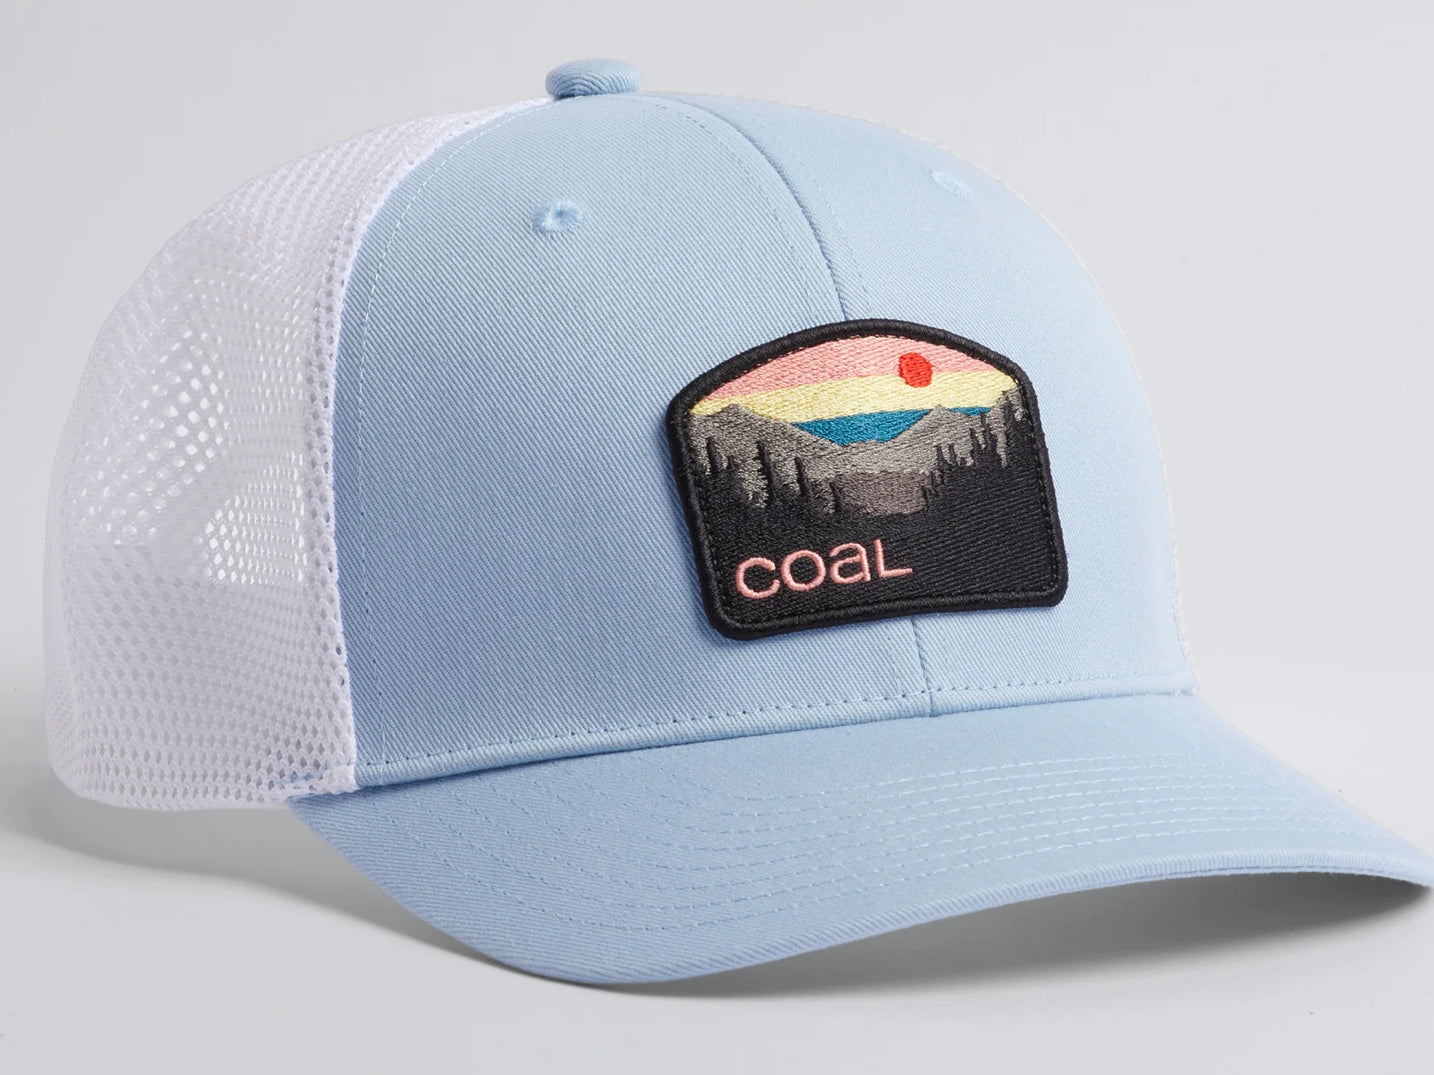 Coal - The Hauler Low One - Trucker Cap